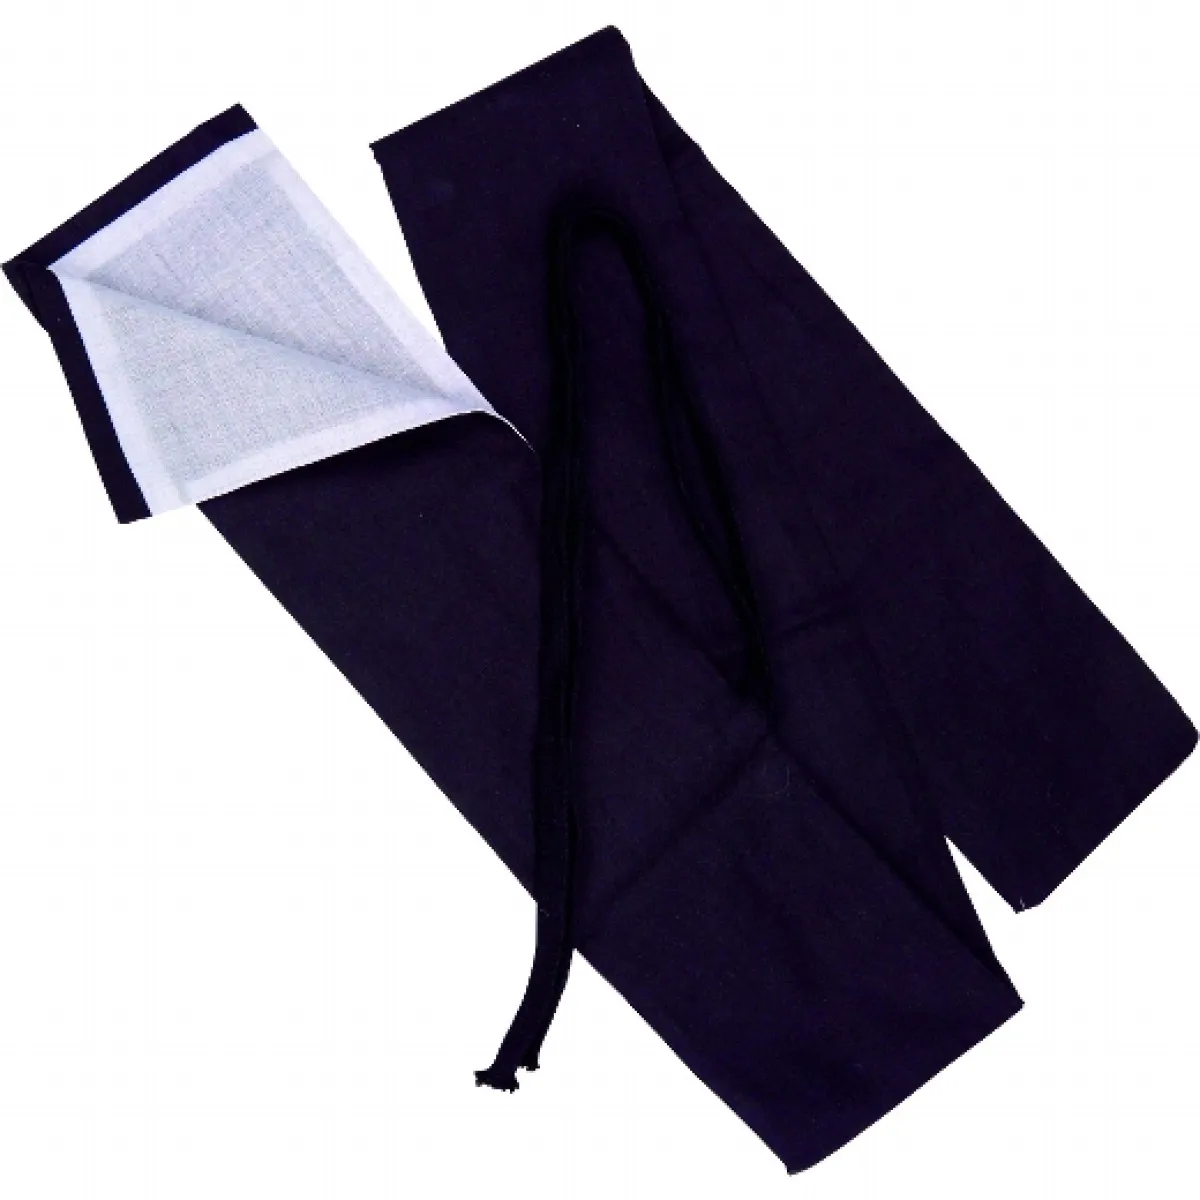 Fabric sheath for katana